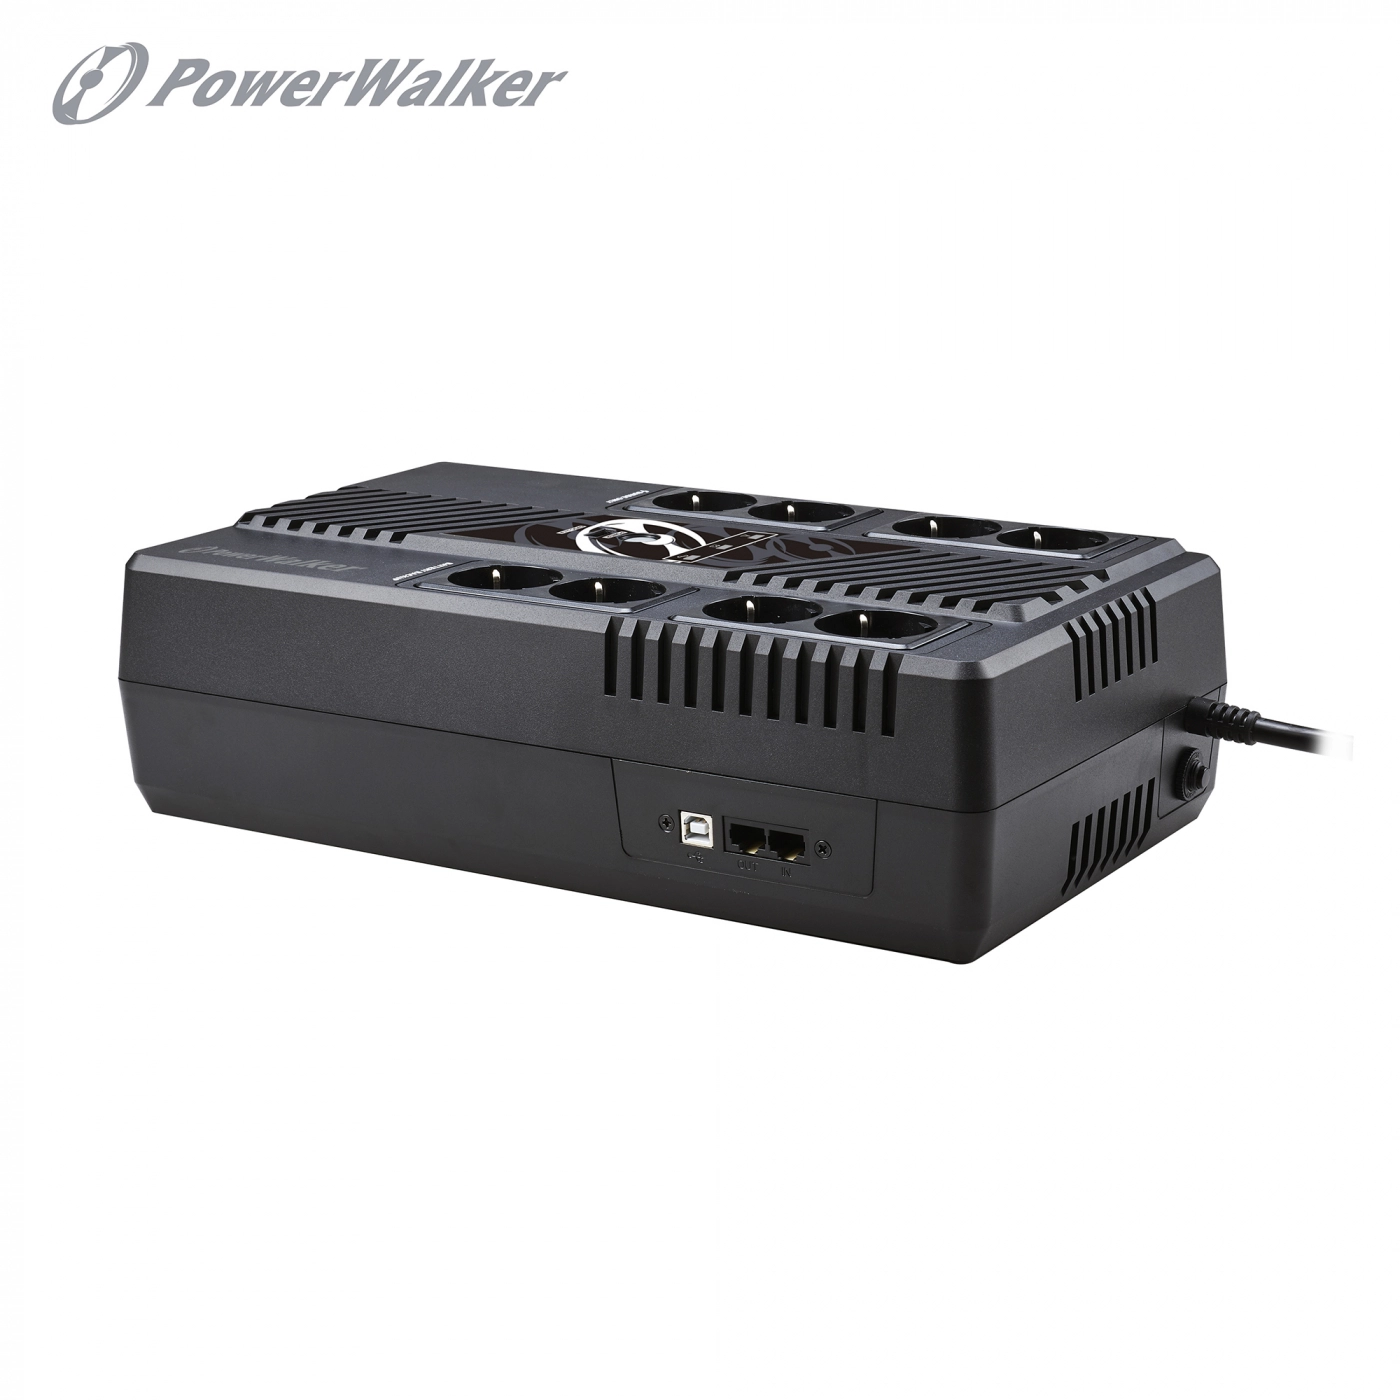 Купить ИБП PowerWalker VI 600 MS - фото 2